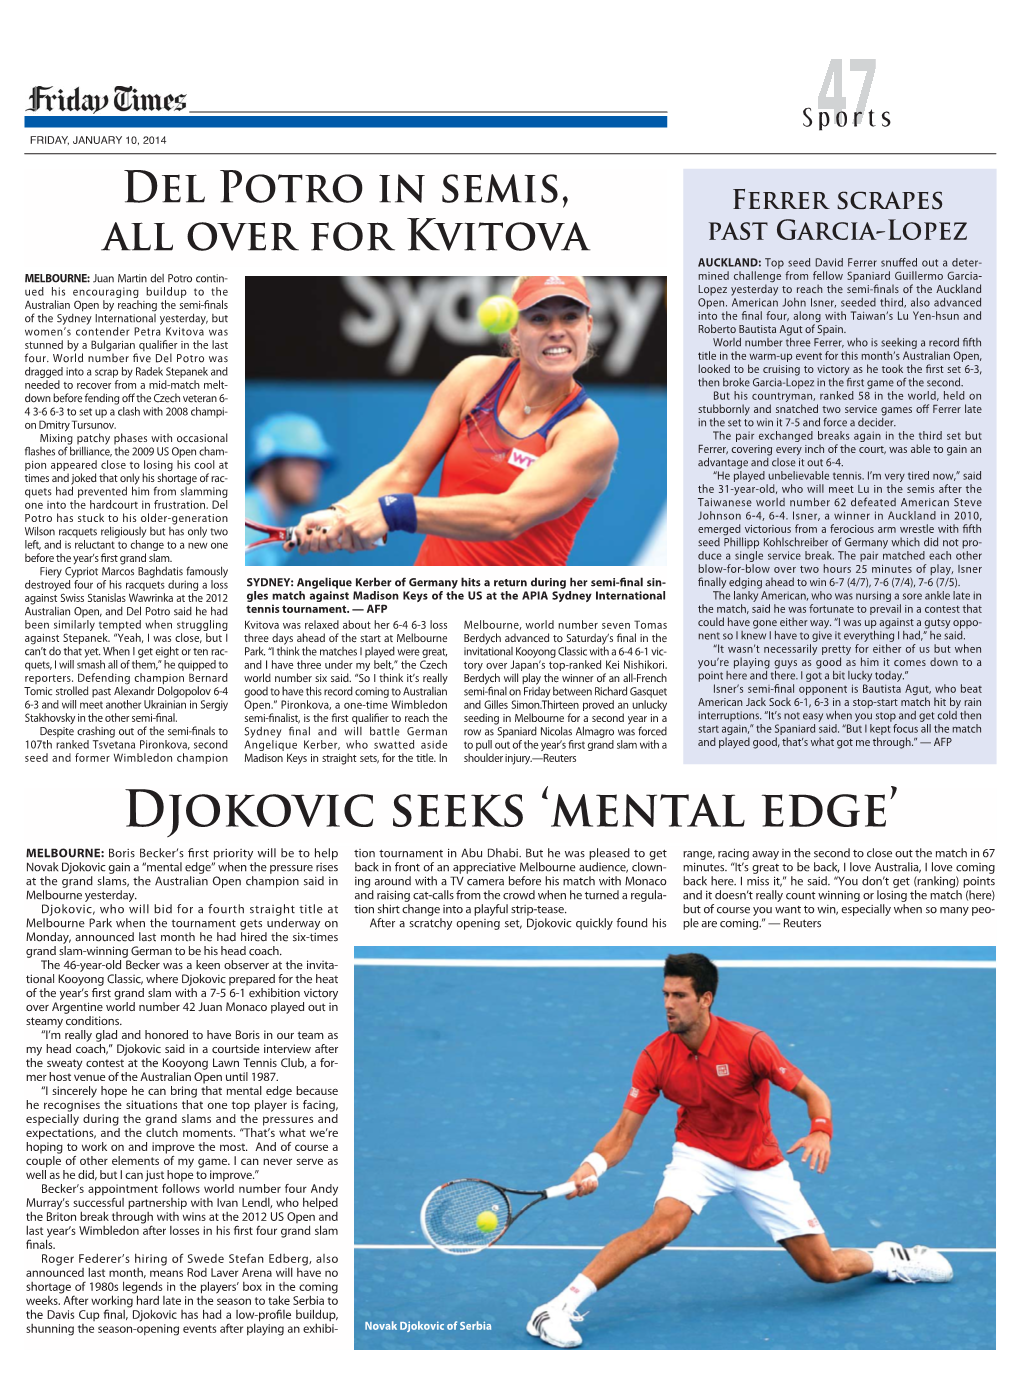 Djokovic Seeks 'Mental Edge'